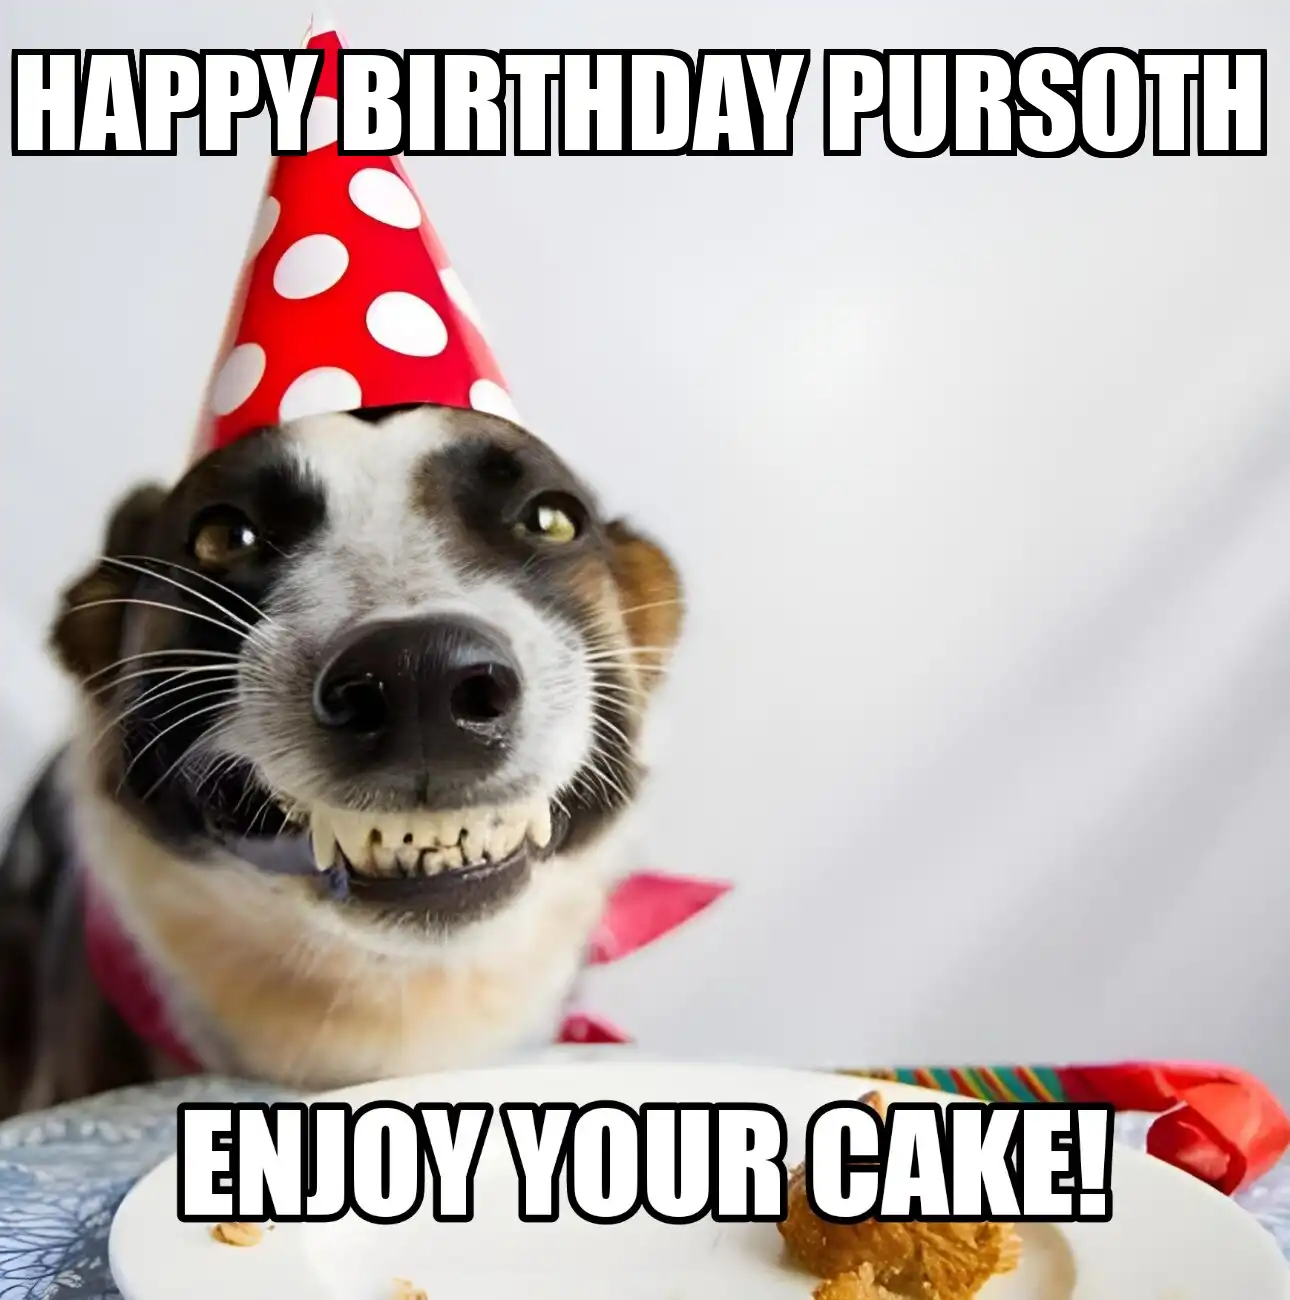 Happy Birthday Pursoth Enjoy Your Cake Dog Meme